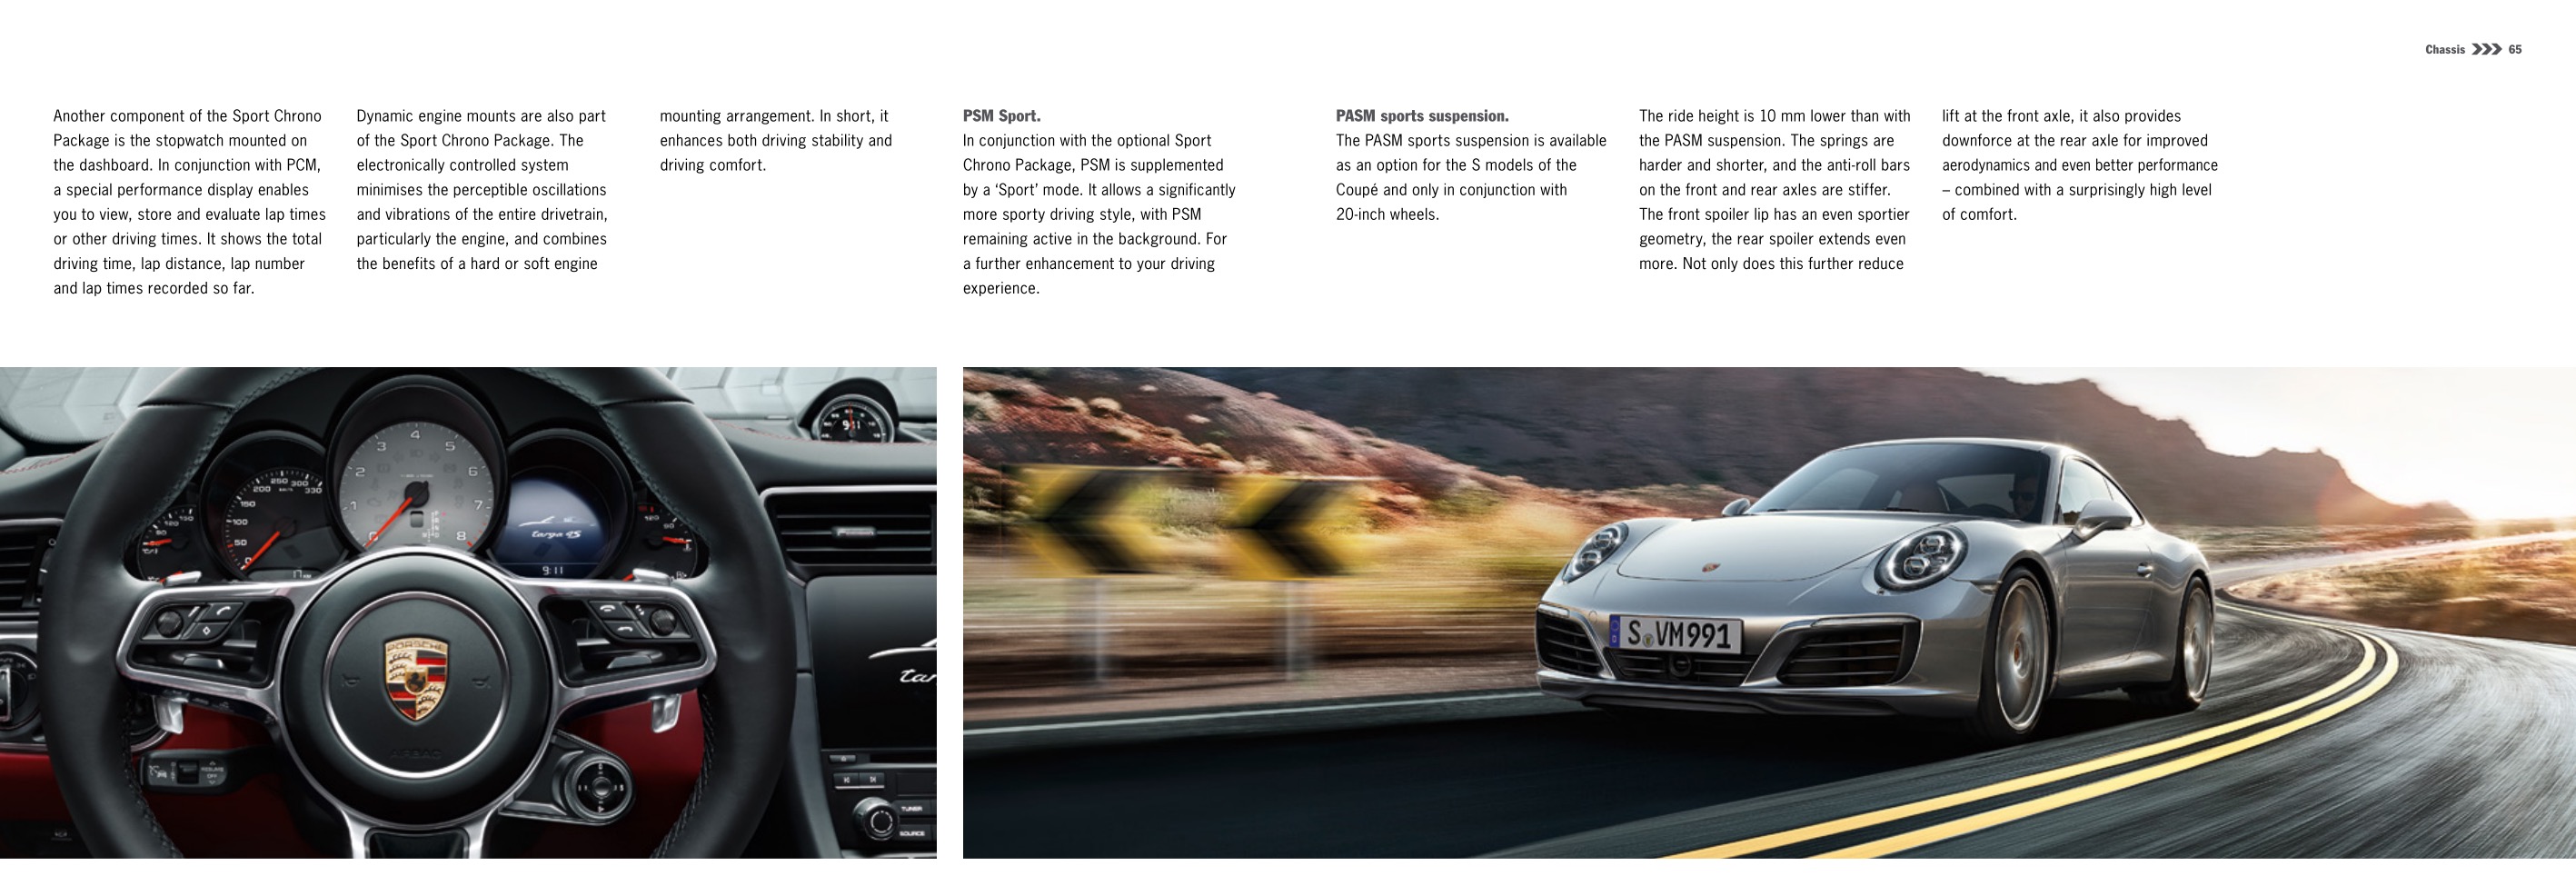 2016 Porsche 911 Brochure Page 34